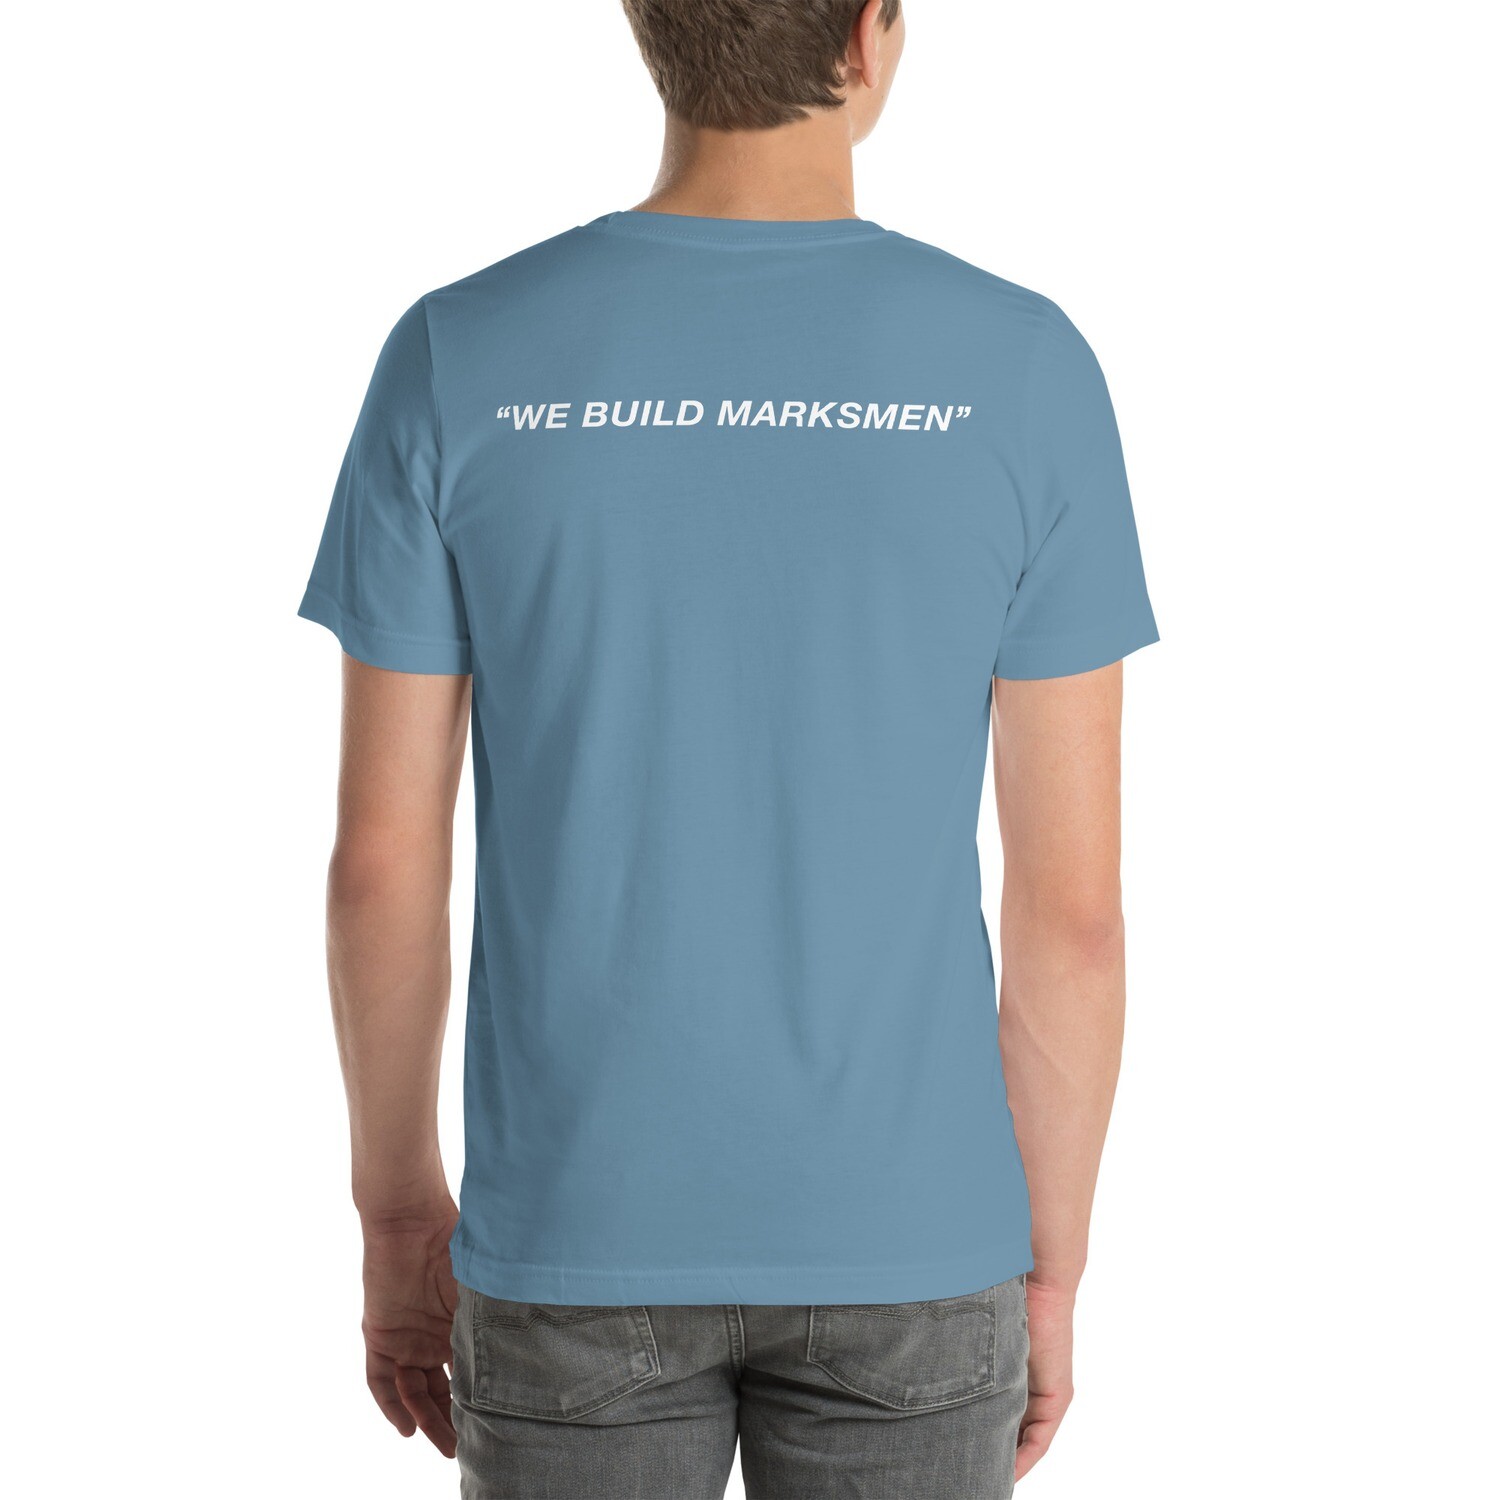 "We Build Marksmen" T-shirt